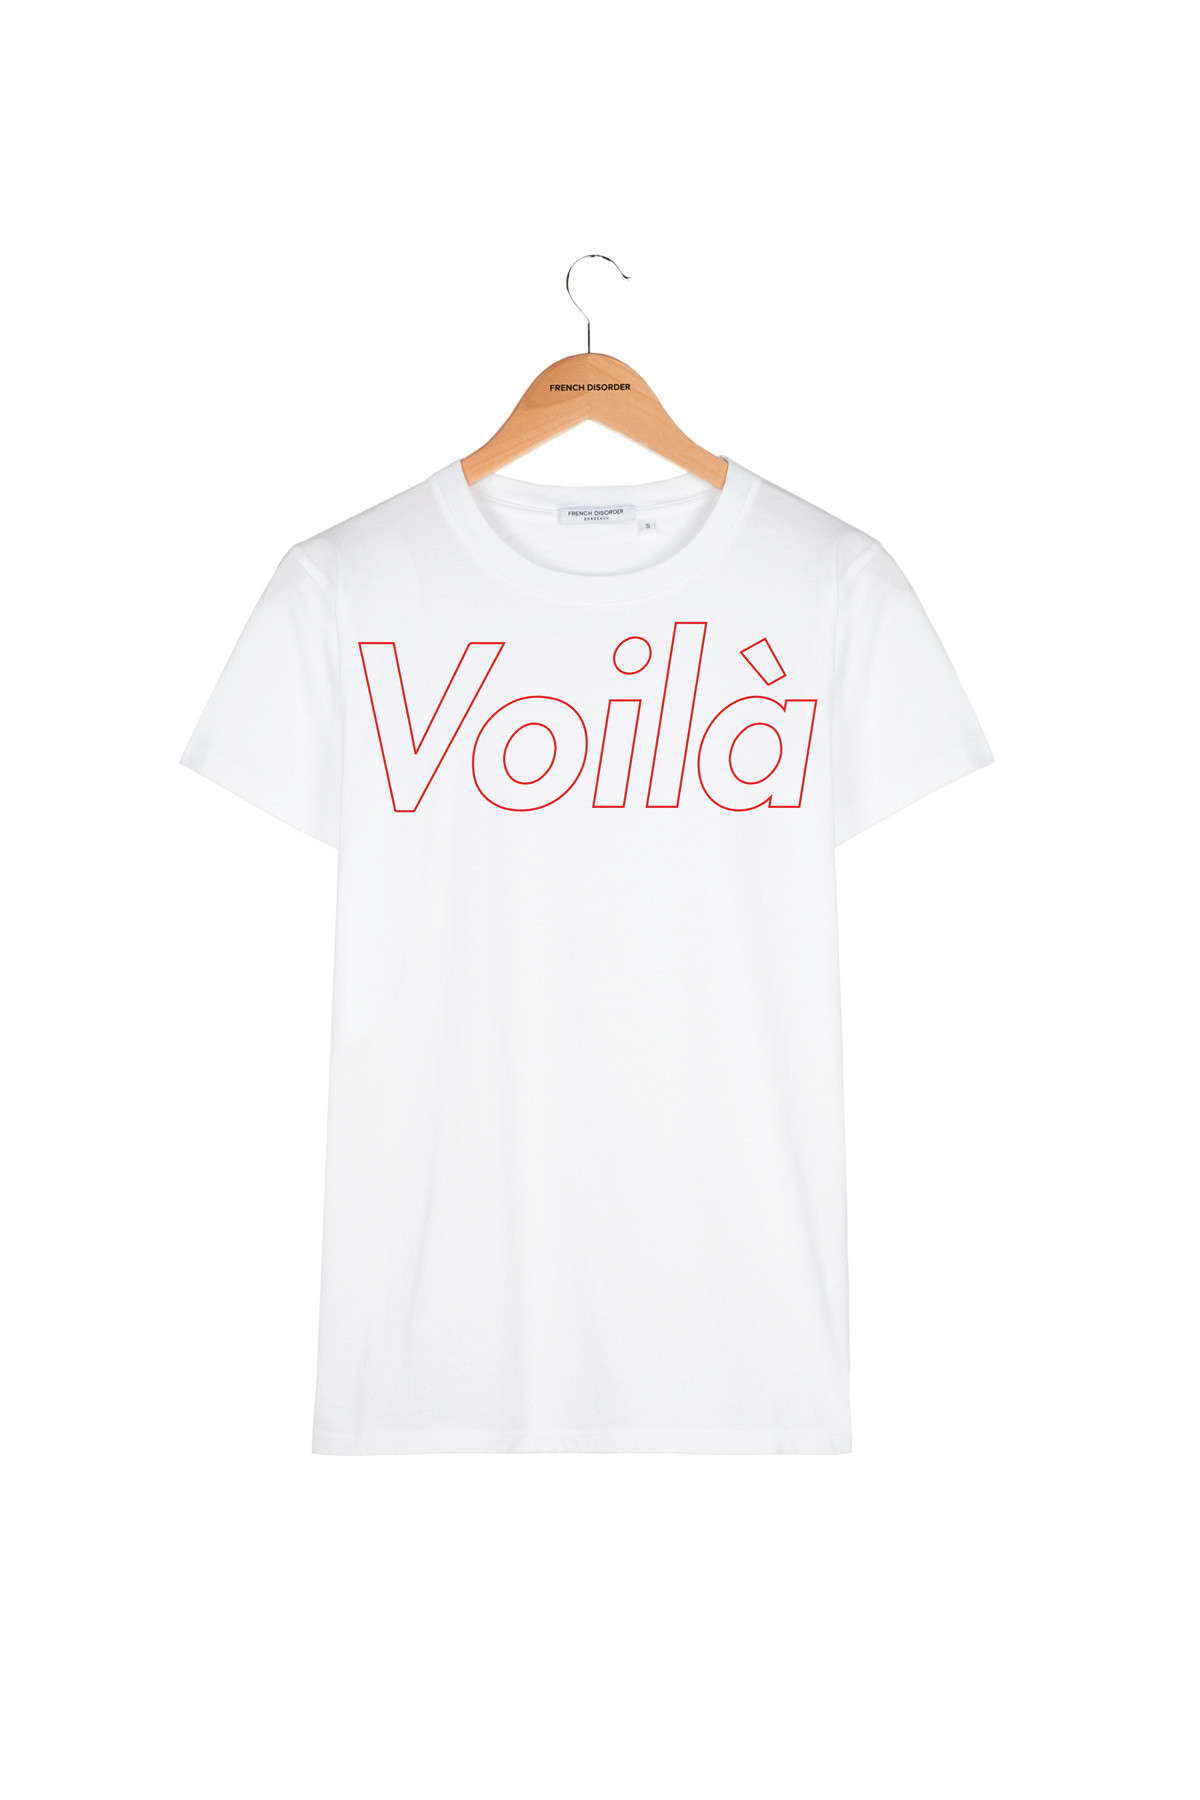 T-shirt VOILA French Disorder